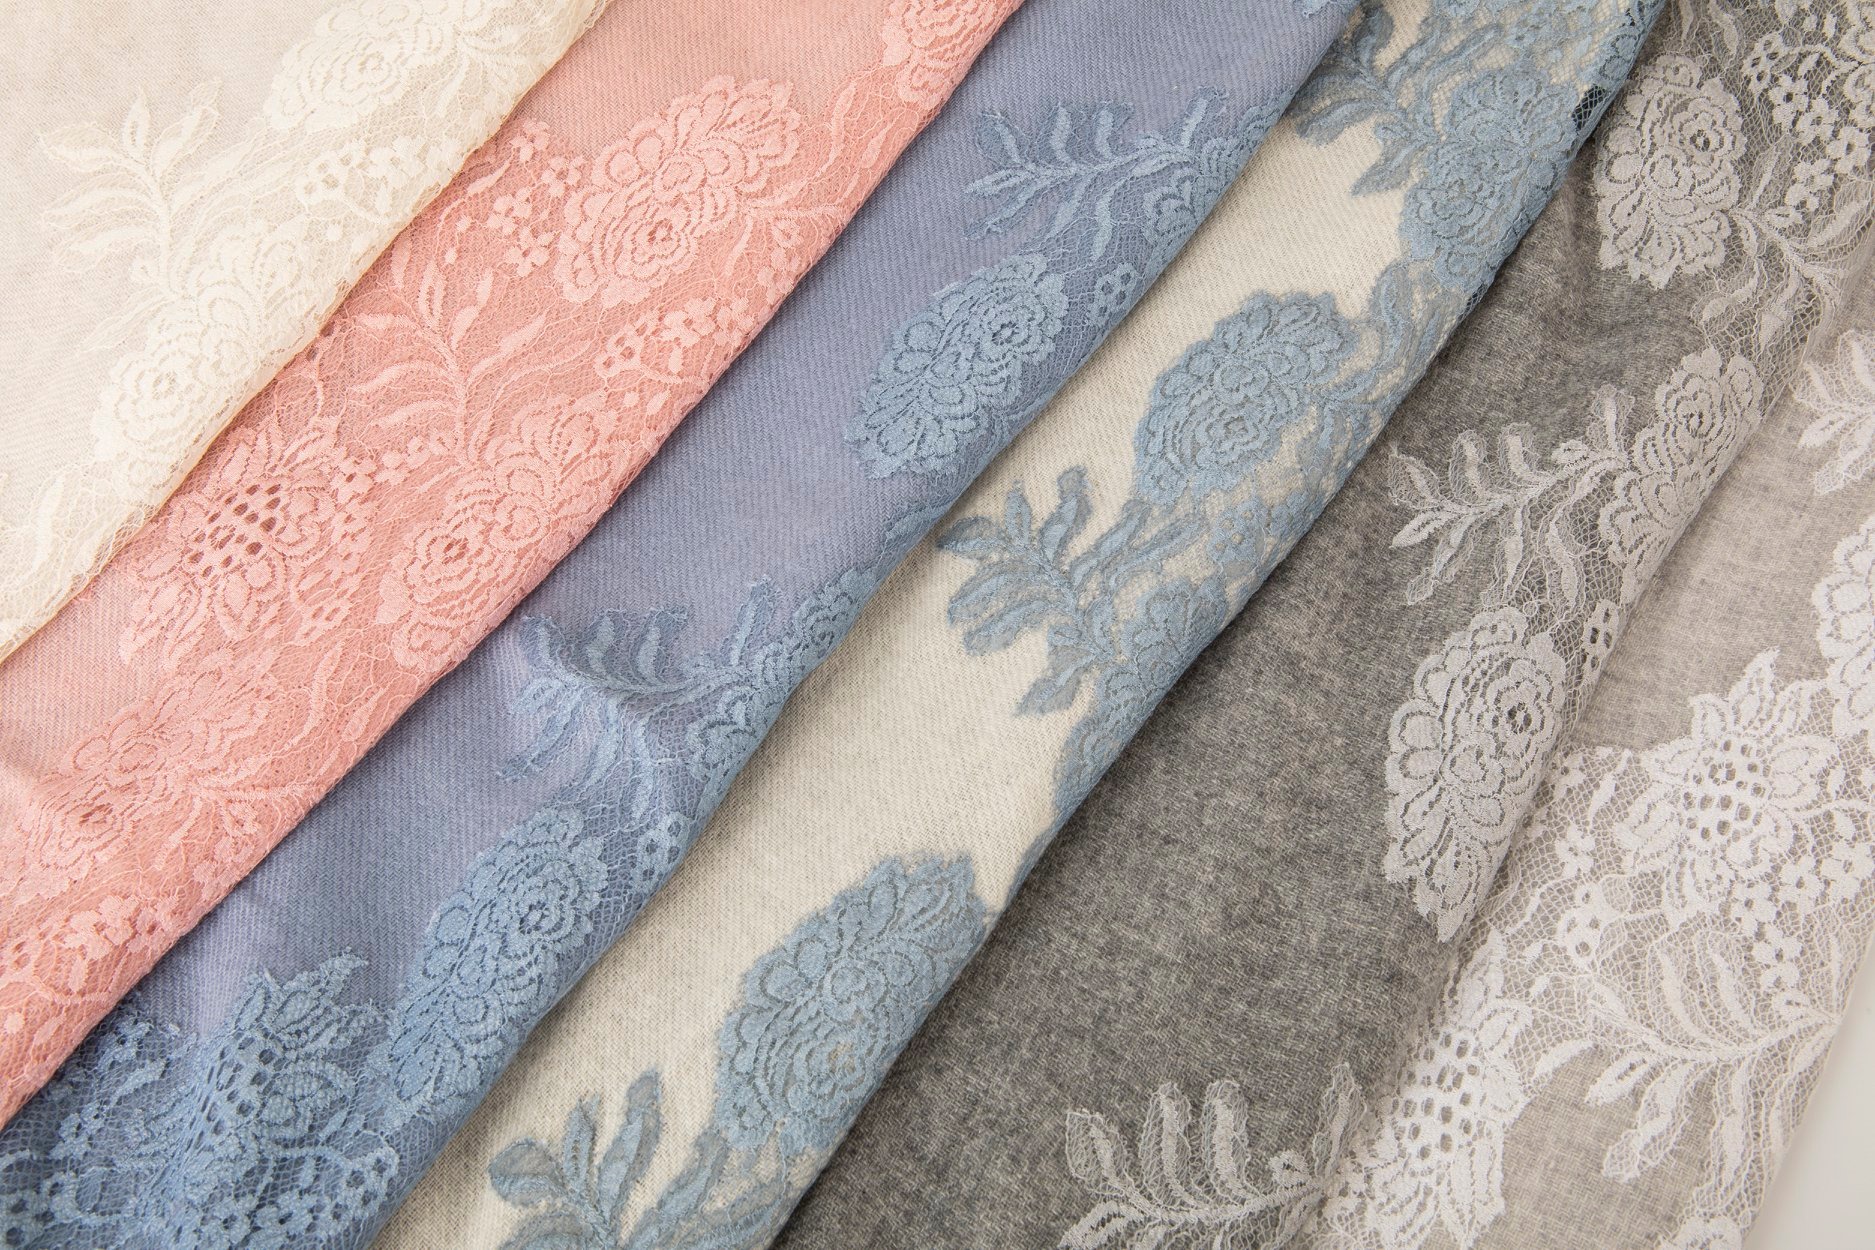 【The Lace Allure】周末氣温下降，一條時尚的圍巾是手袋中不能缺少的單品。Atsuro Tayama精選山羊絨混羊毛織出觸感細膩、輕巧舒適的圍巾，特意加入高雅的蕾絲拼布帶出女性的嫵媚，為造型添上剛柔並重的氣息。多元化的顏色設計，讓您隨不同場合及心情打造具層次感又保暖的造型，釋放您與別不同的時尚魅力吧! 更多Atsuro Tayama單品在Sidefame網店發售﹕